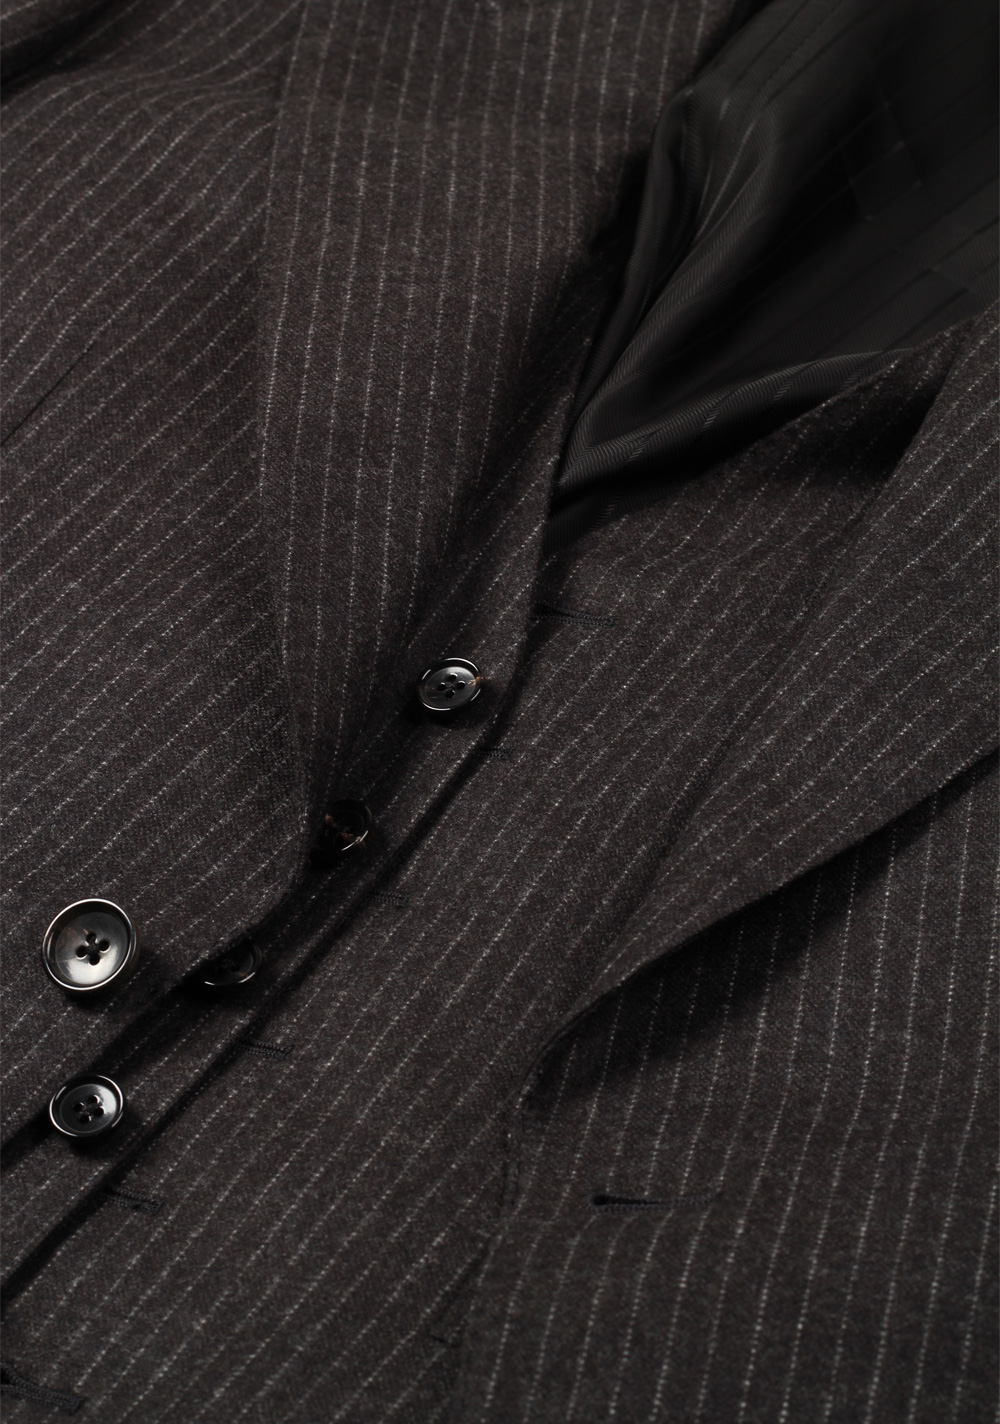 TOM FORD Shelton Gray Striped 3 Piece Suit Size 46 / 36R U.S. Wool | Costume Limité